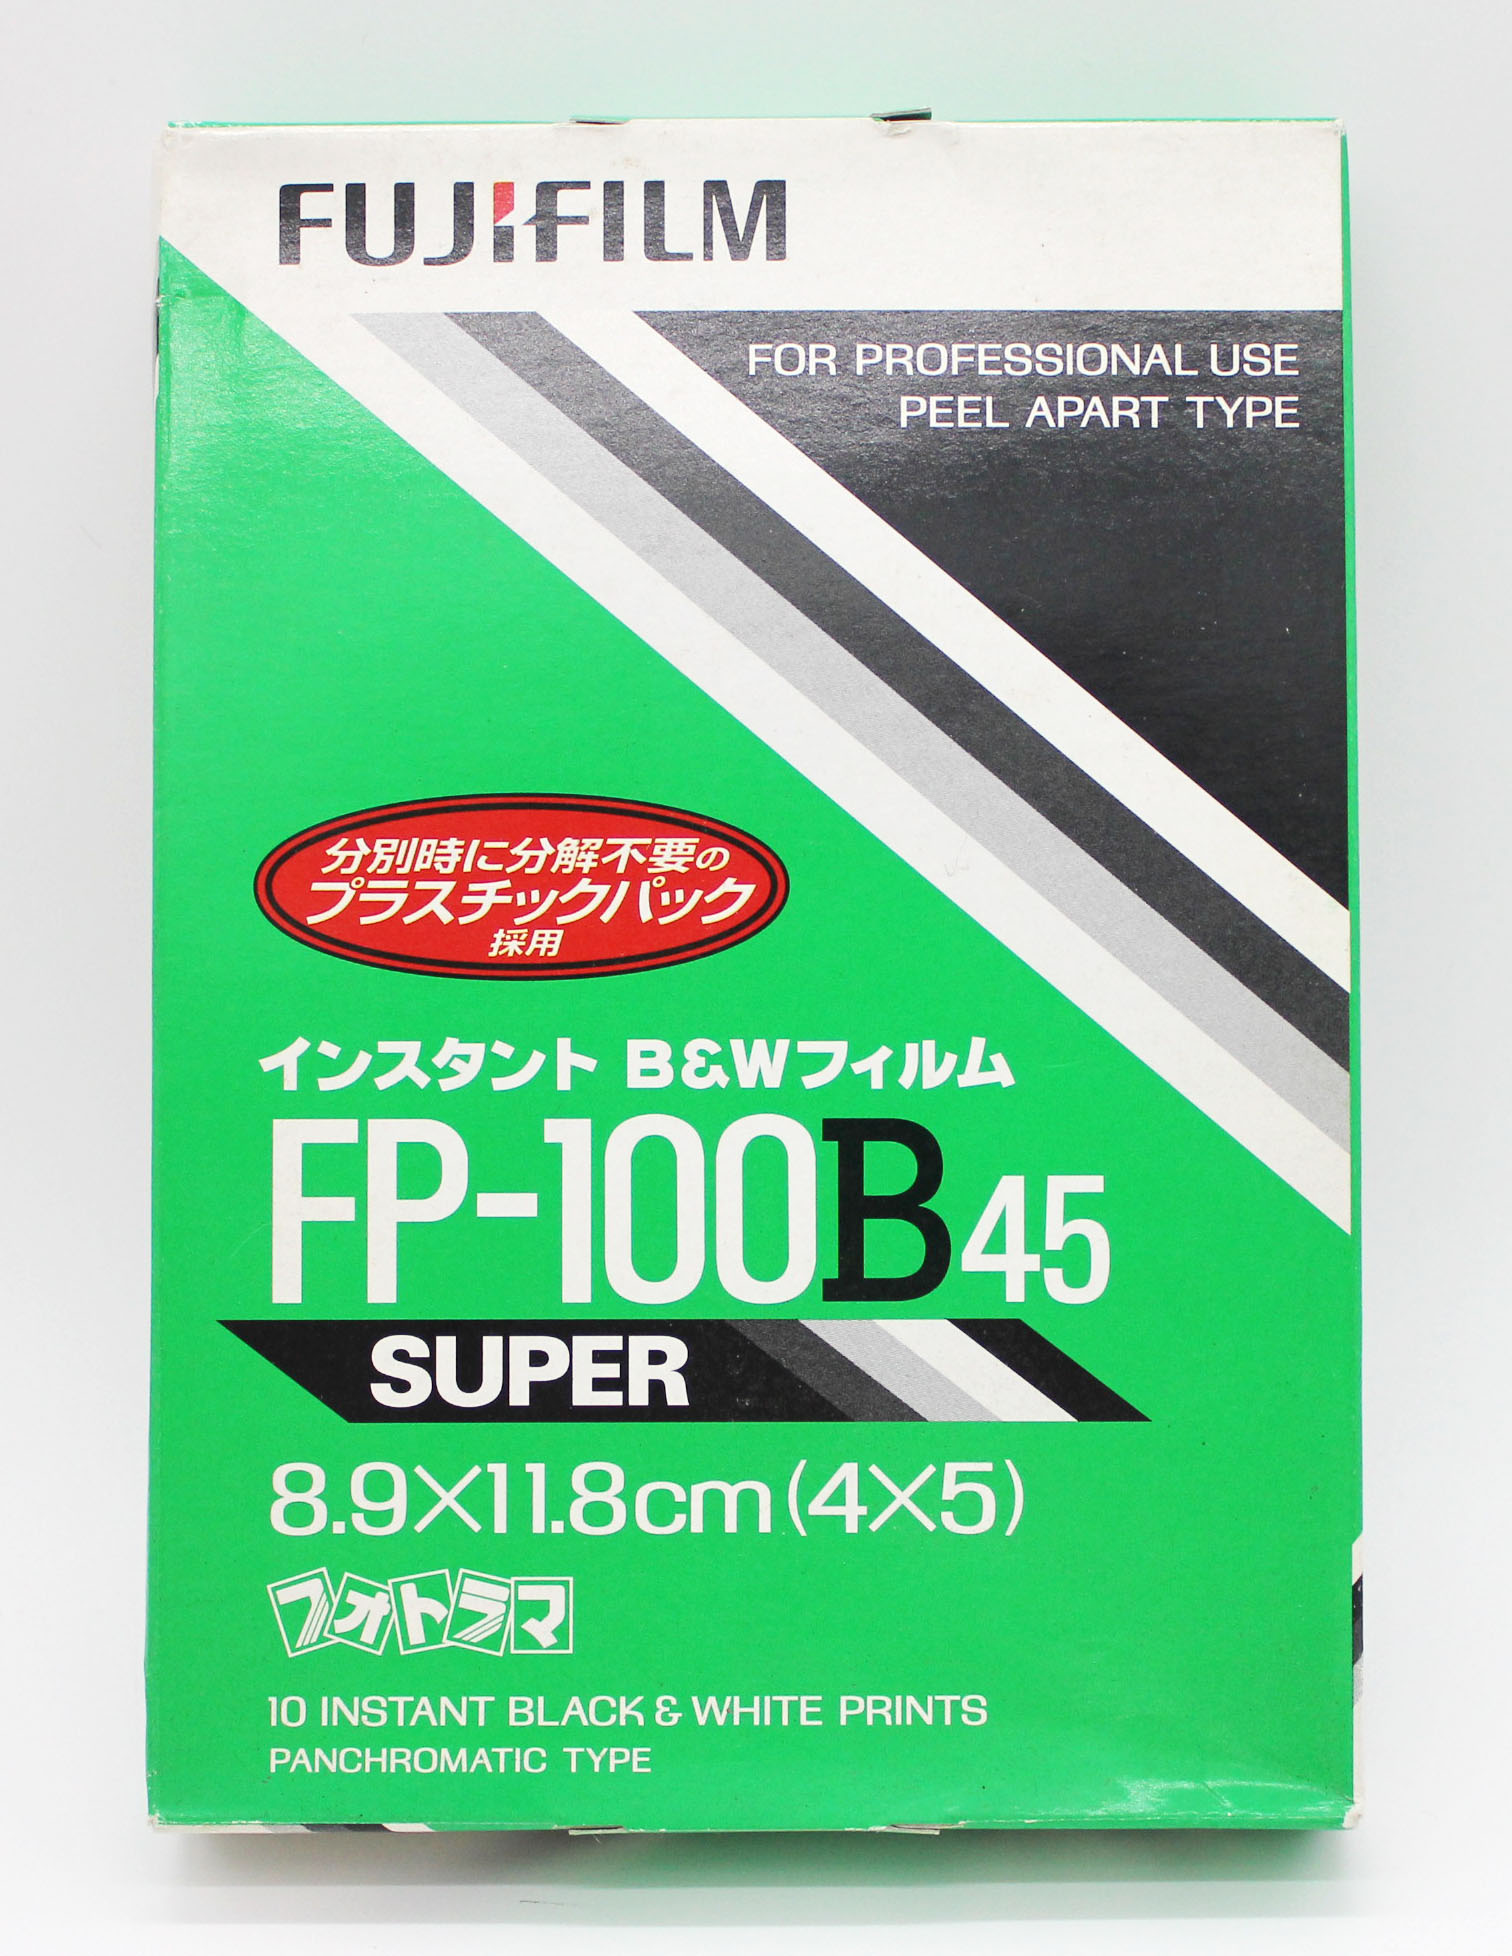 Japan Used Camera Shop | [New] Fuji Fujifilm FP-100B45 4x5 8.9x11.8cm Instant Black & White Film (EXP 6/2011)